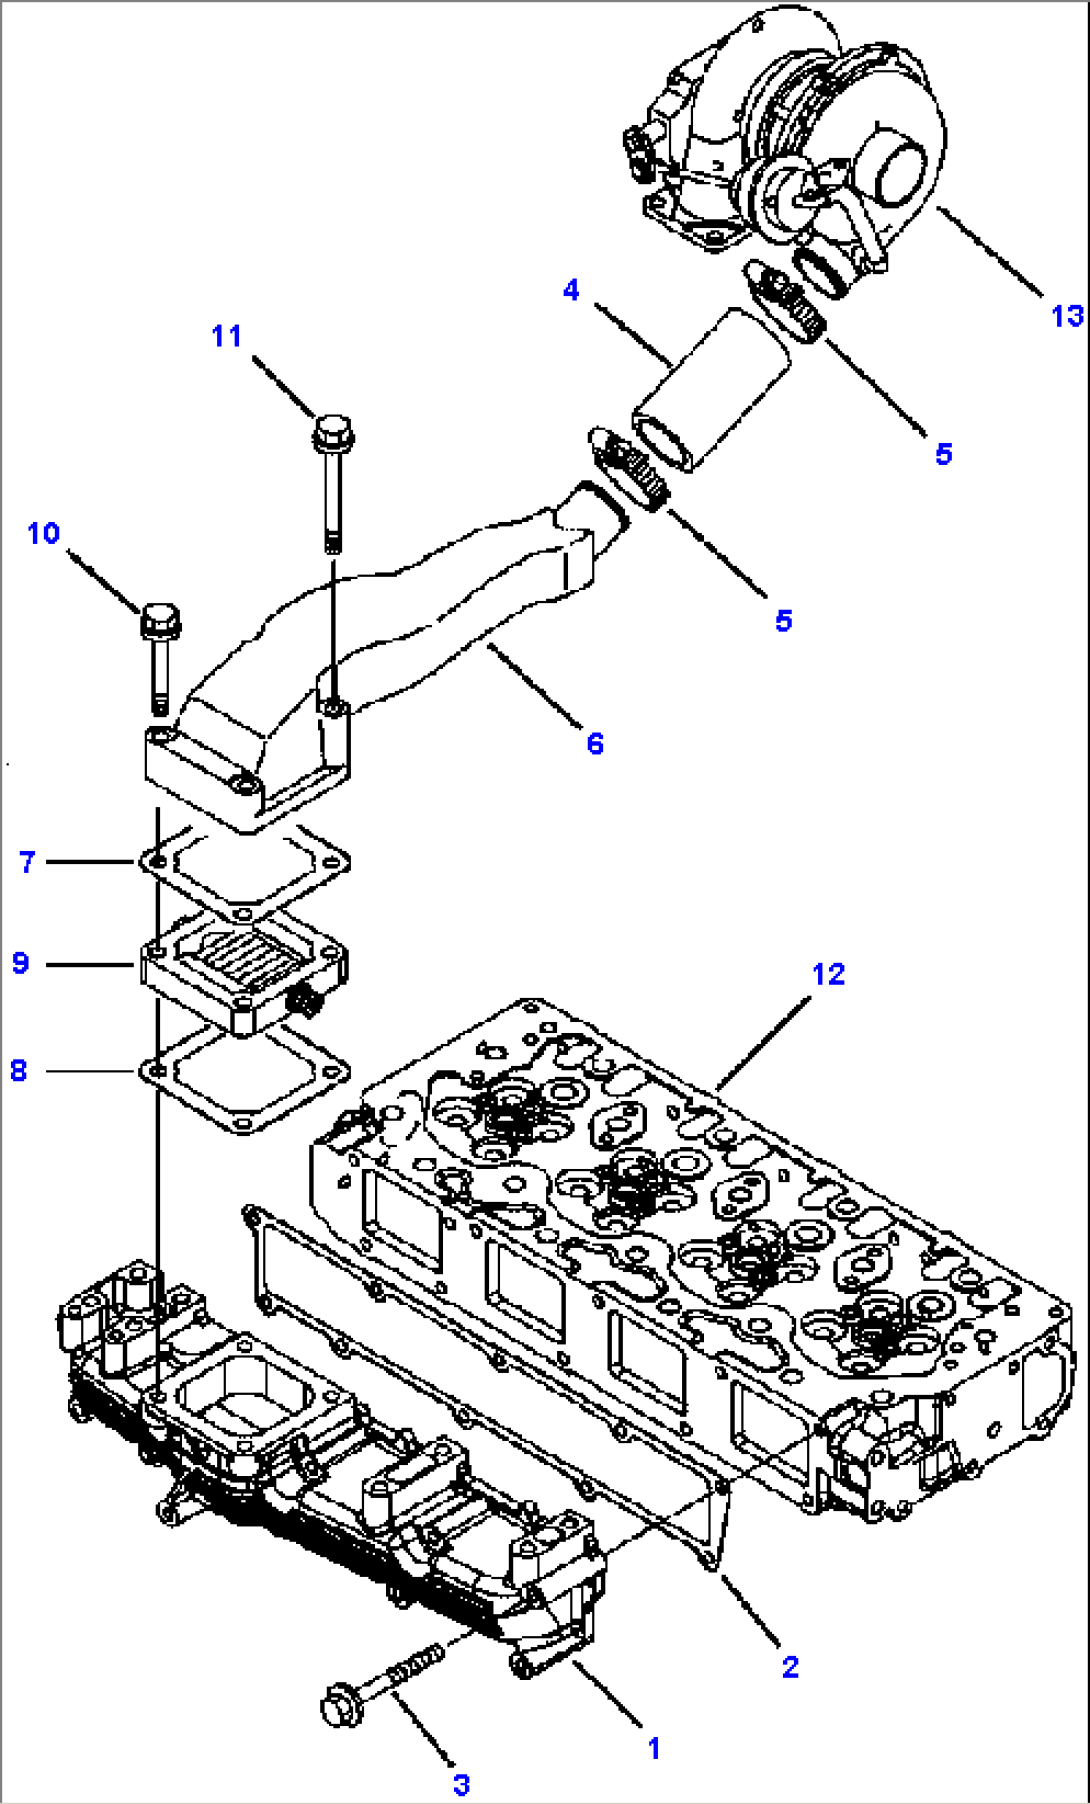 FIG. A0105-01A1 TIER II ENGINE - INTAKE MANIFOLD